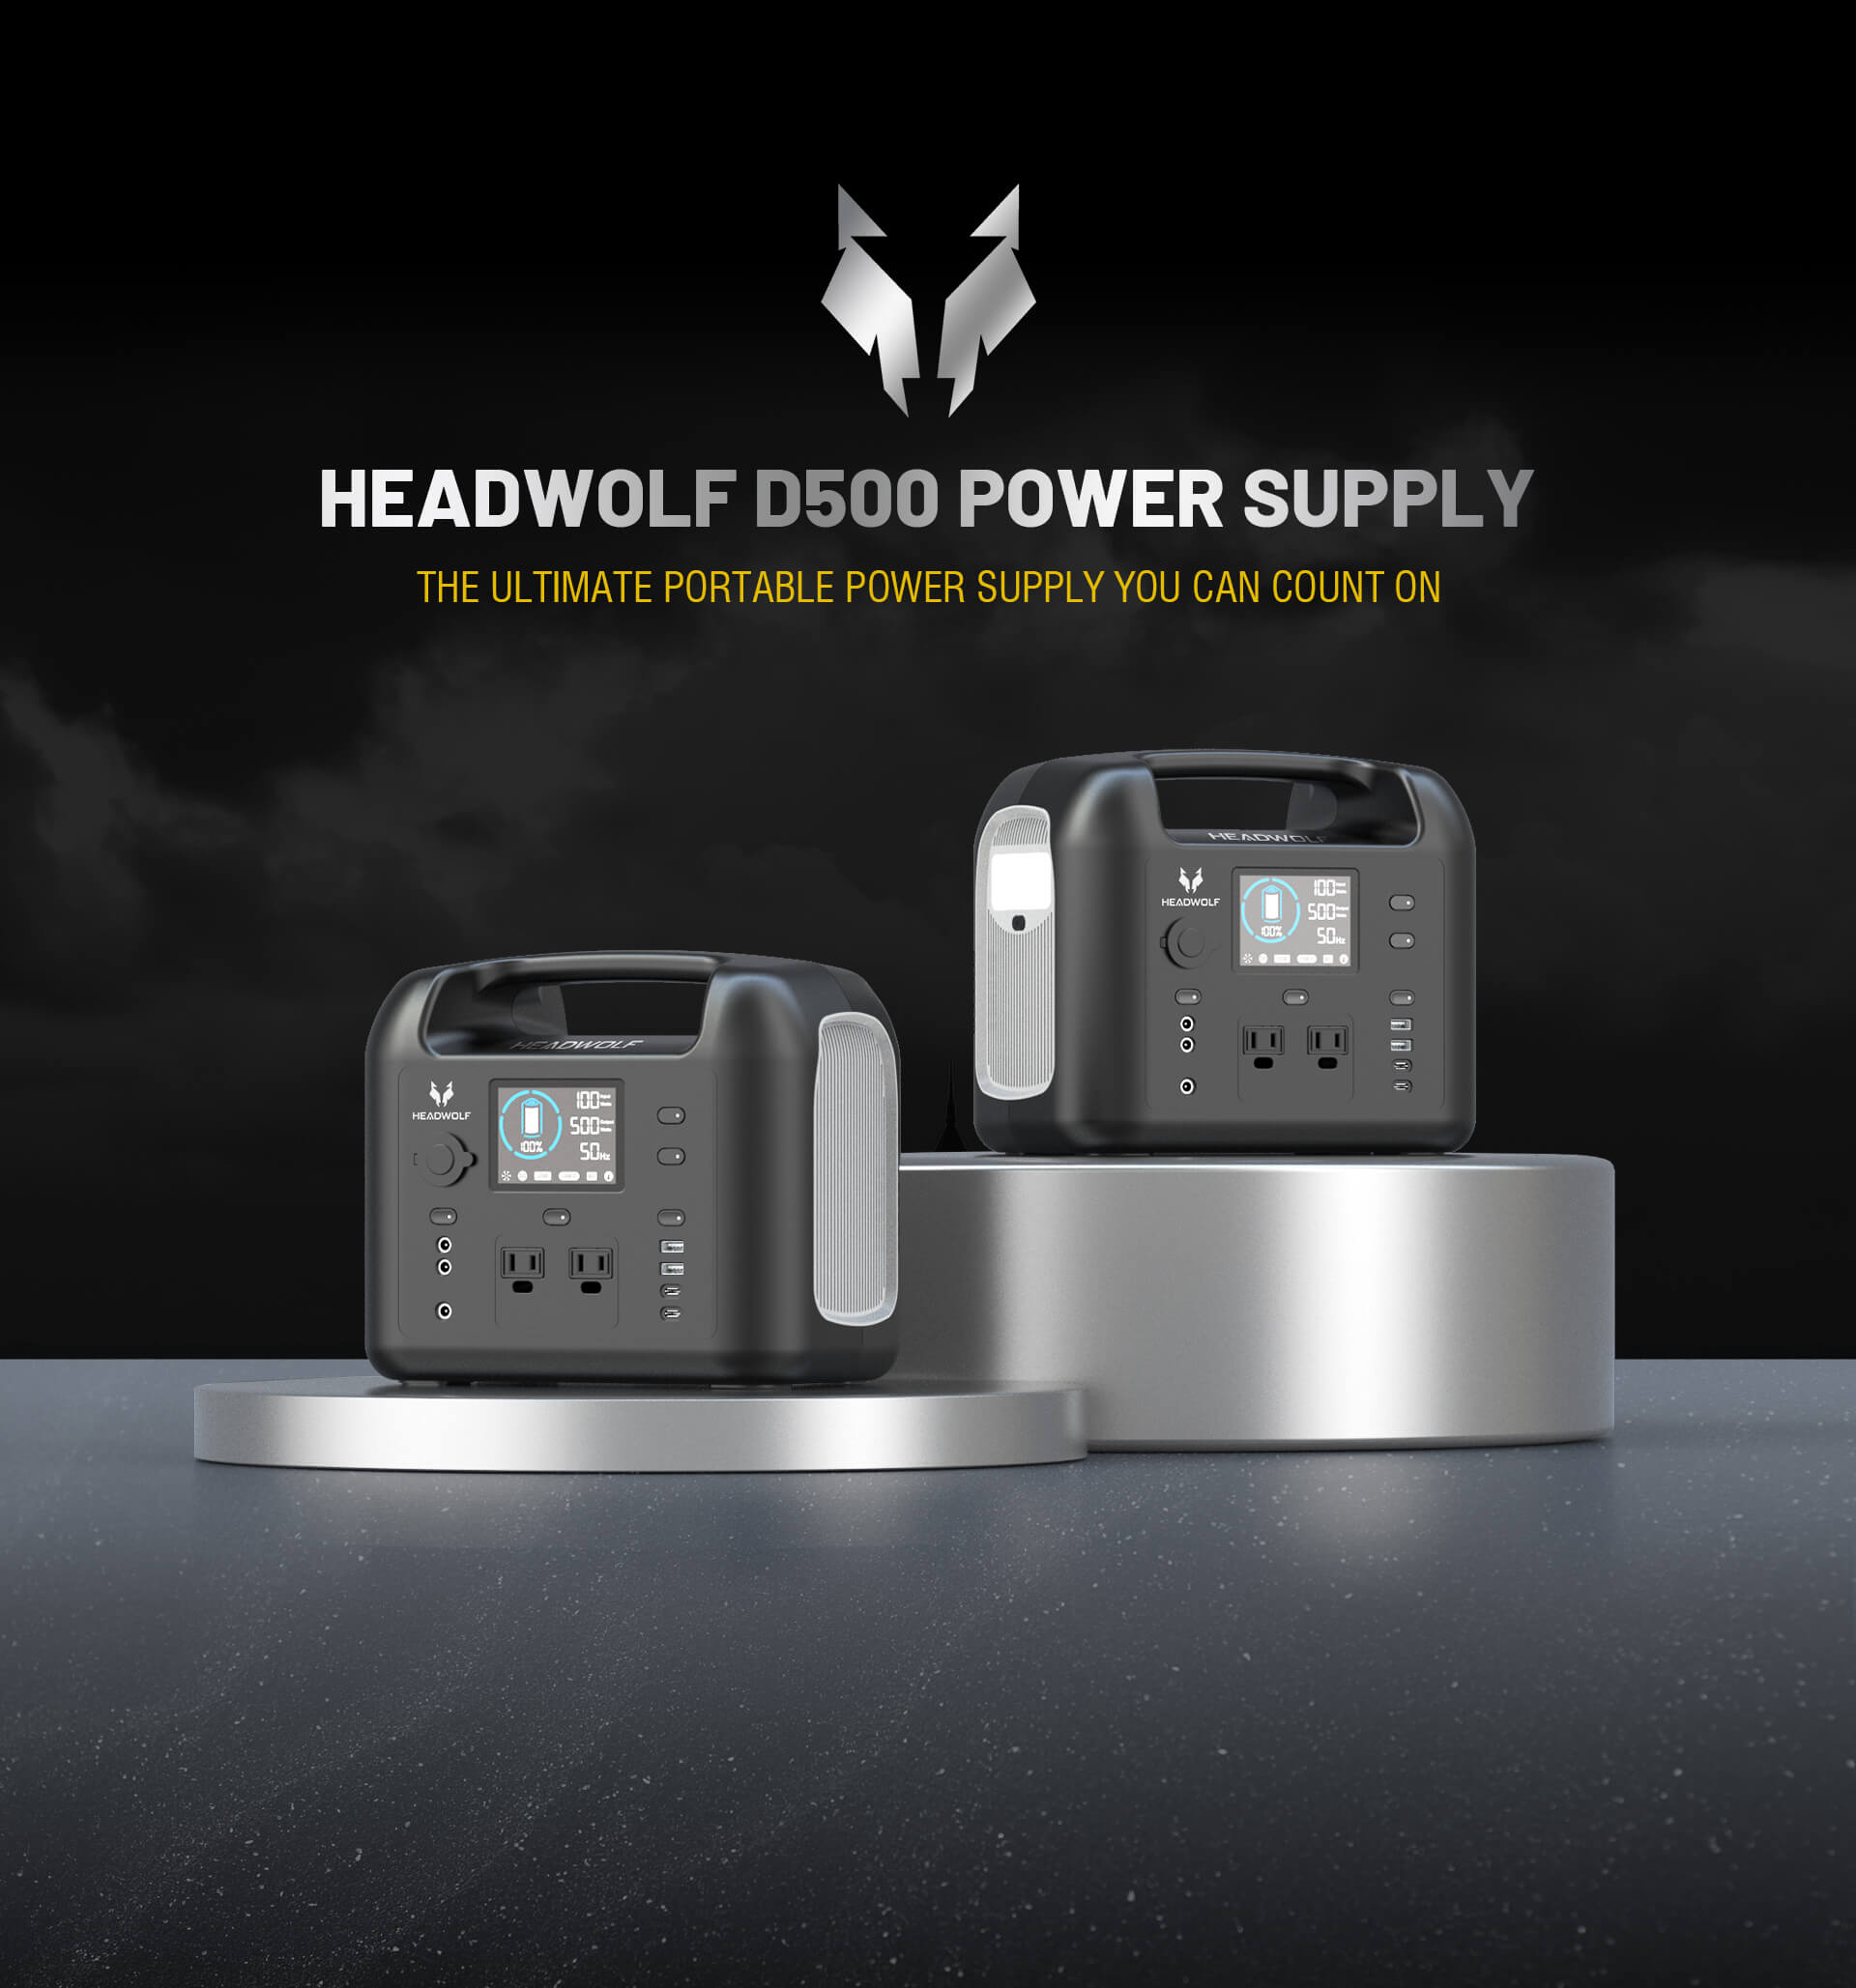 Headwolf D500 Power Supply